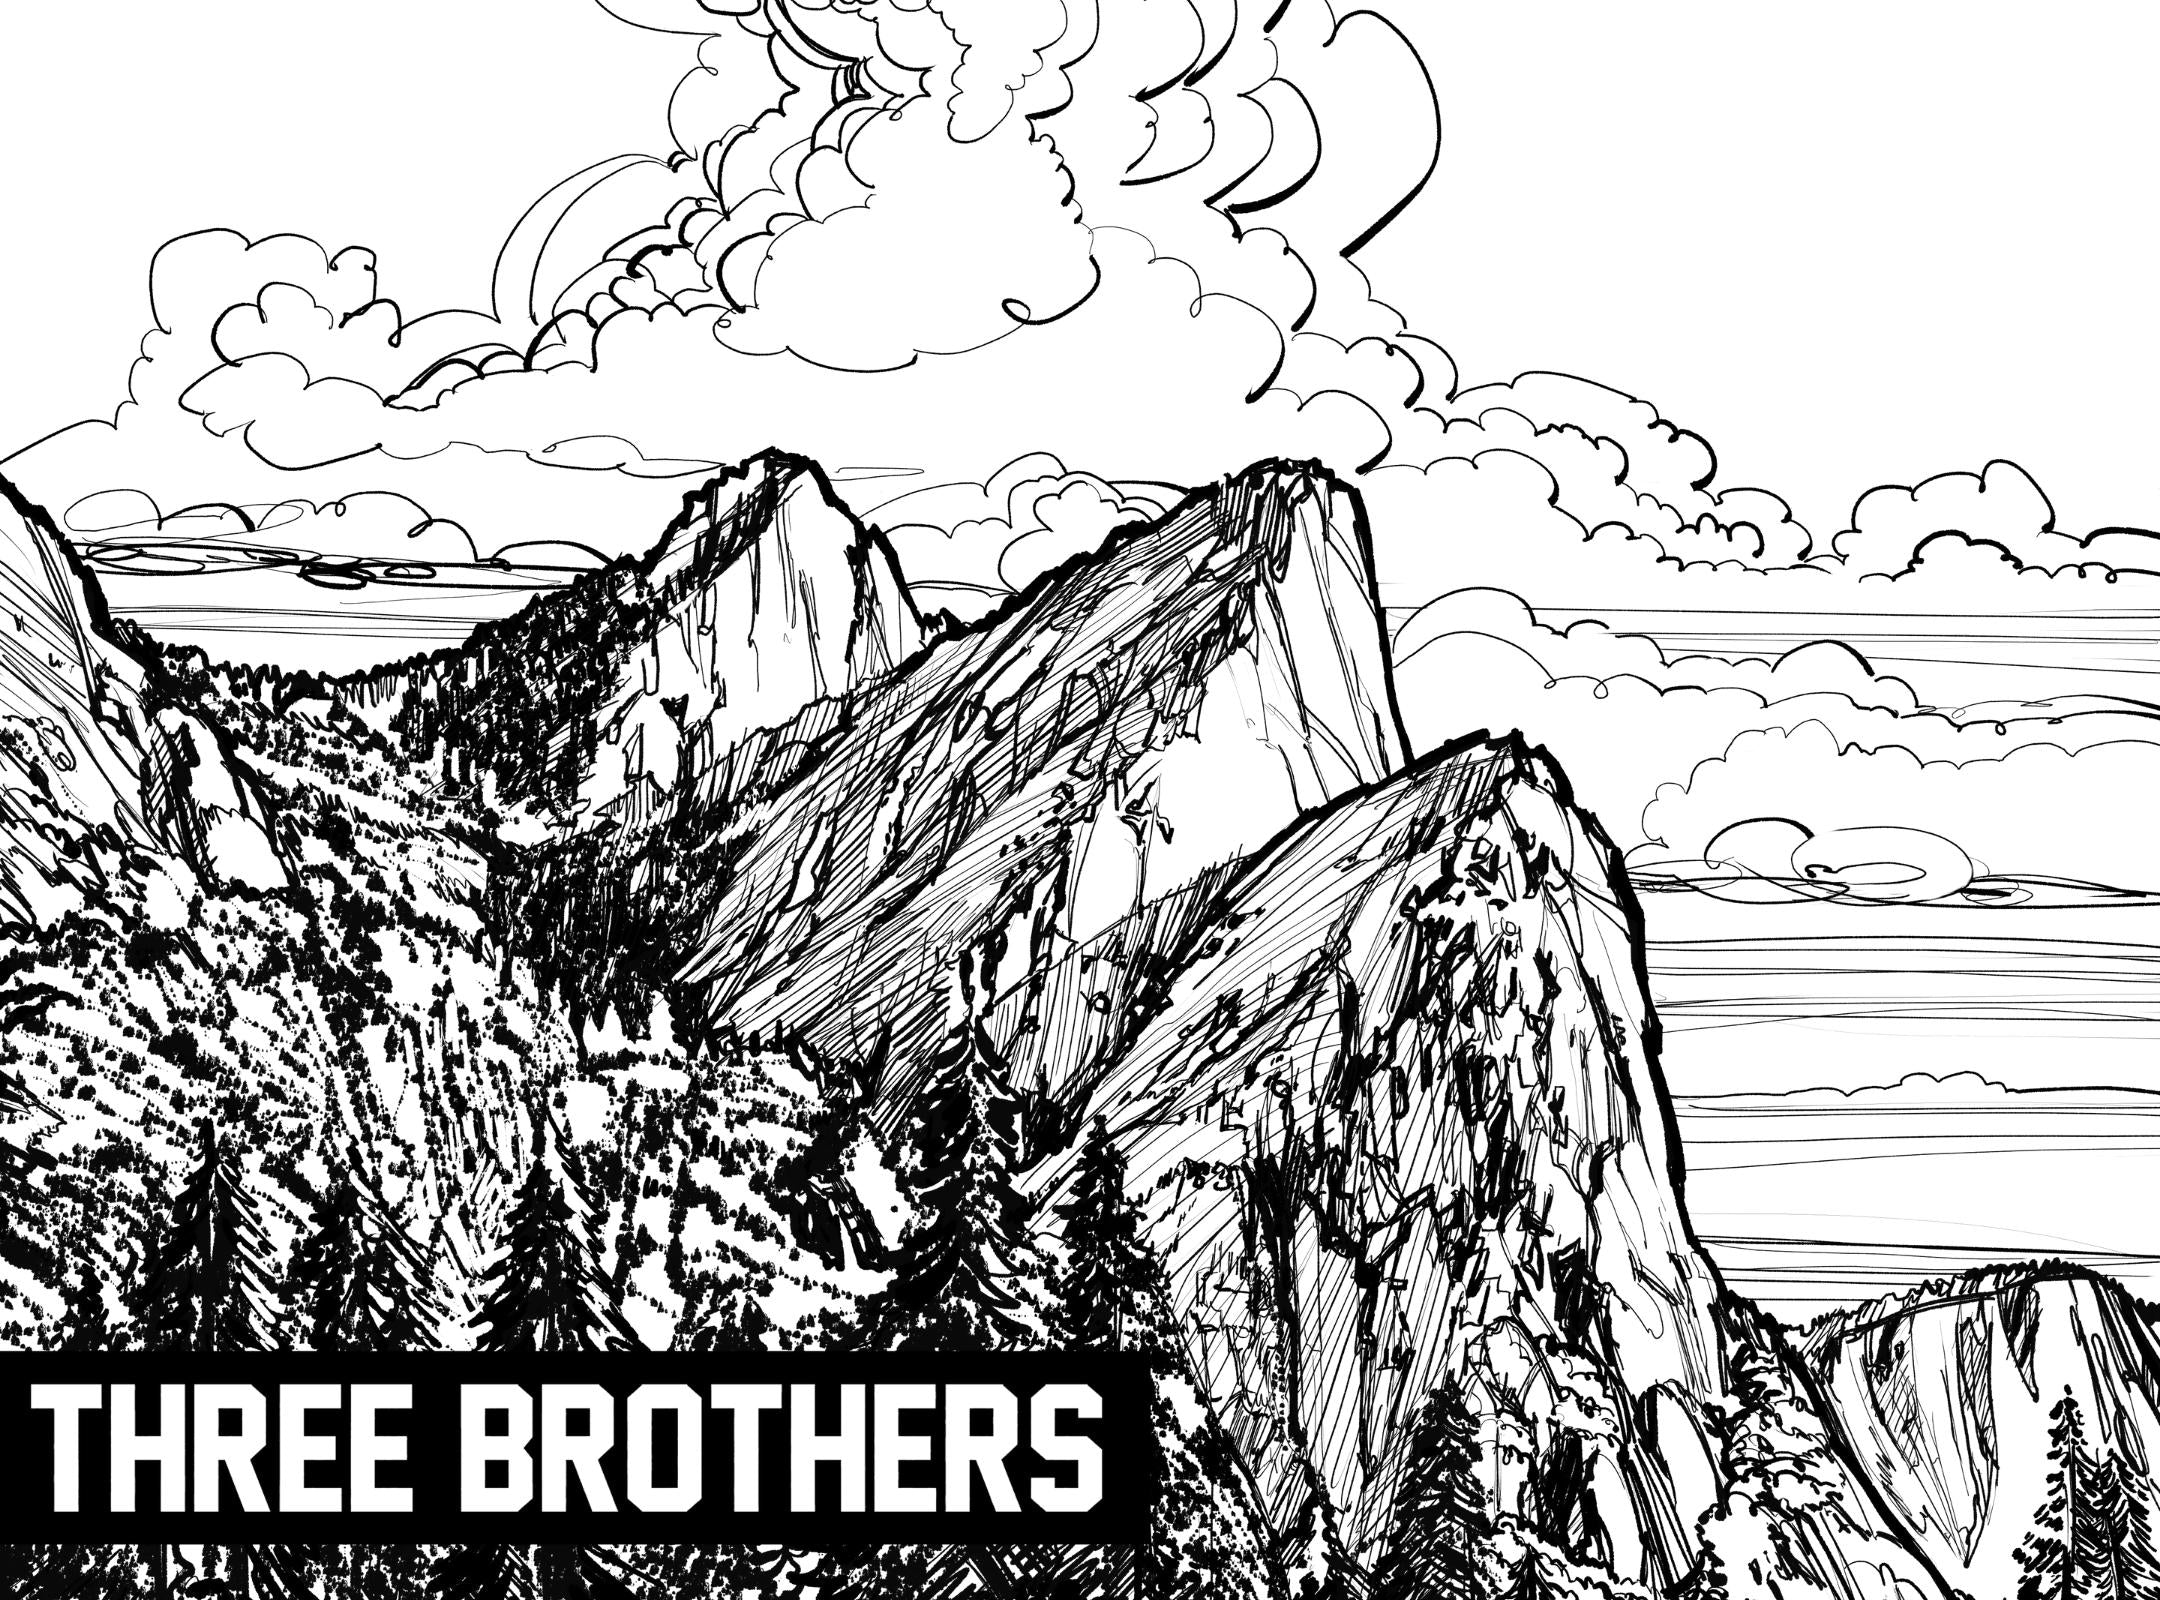 Sketched image of Three Brothers peak in Yosemite Valley.